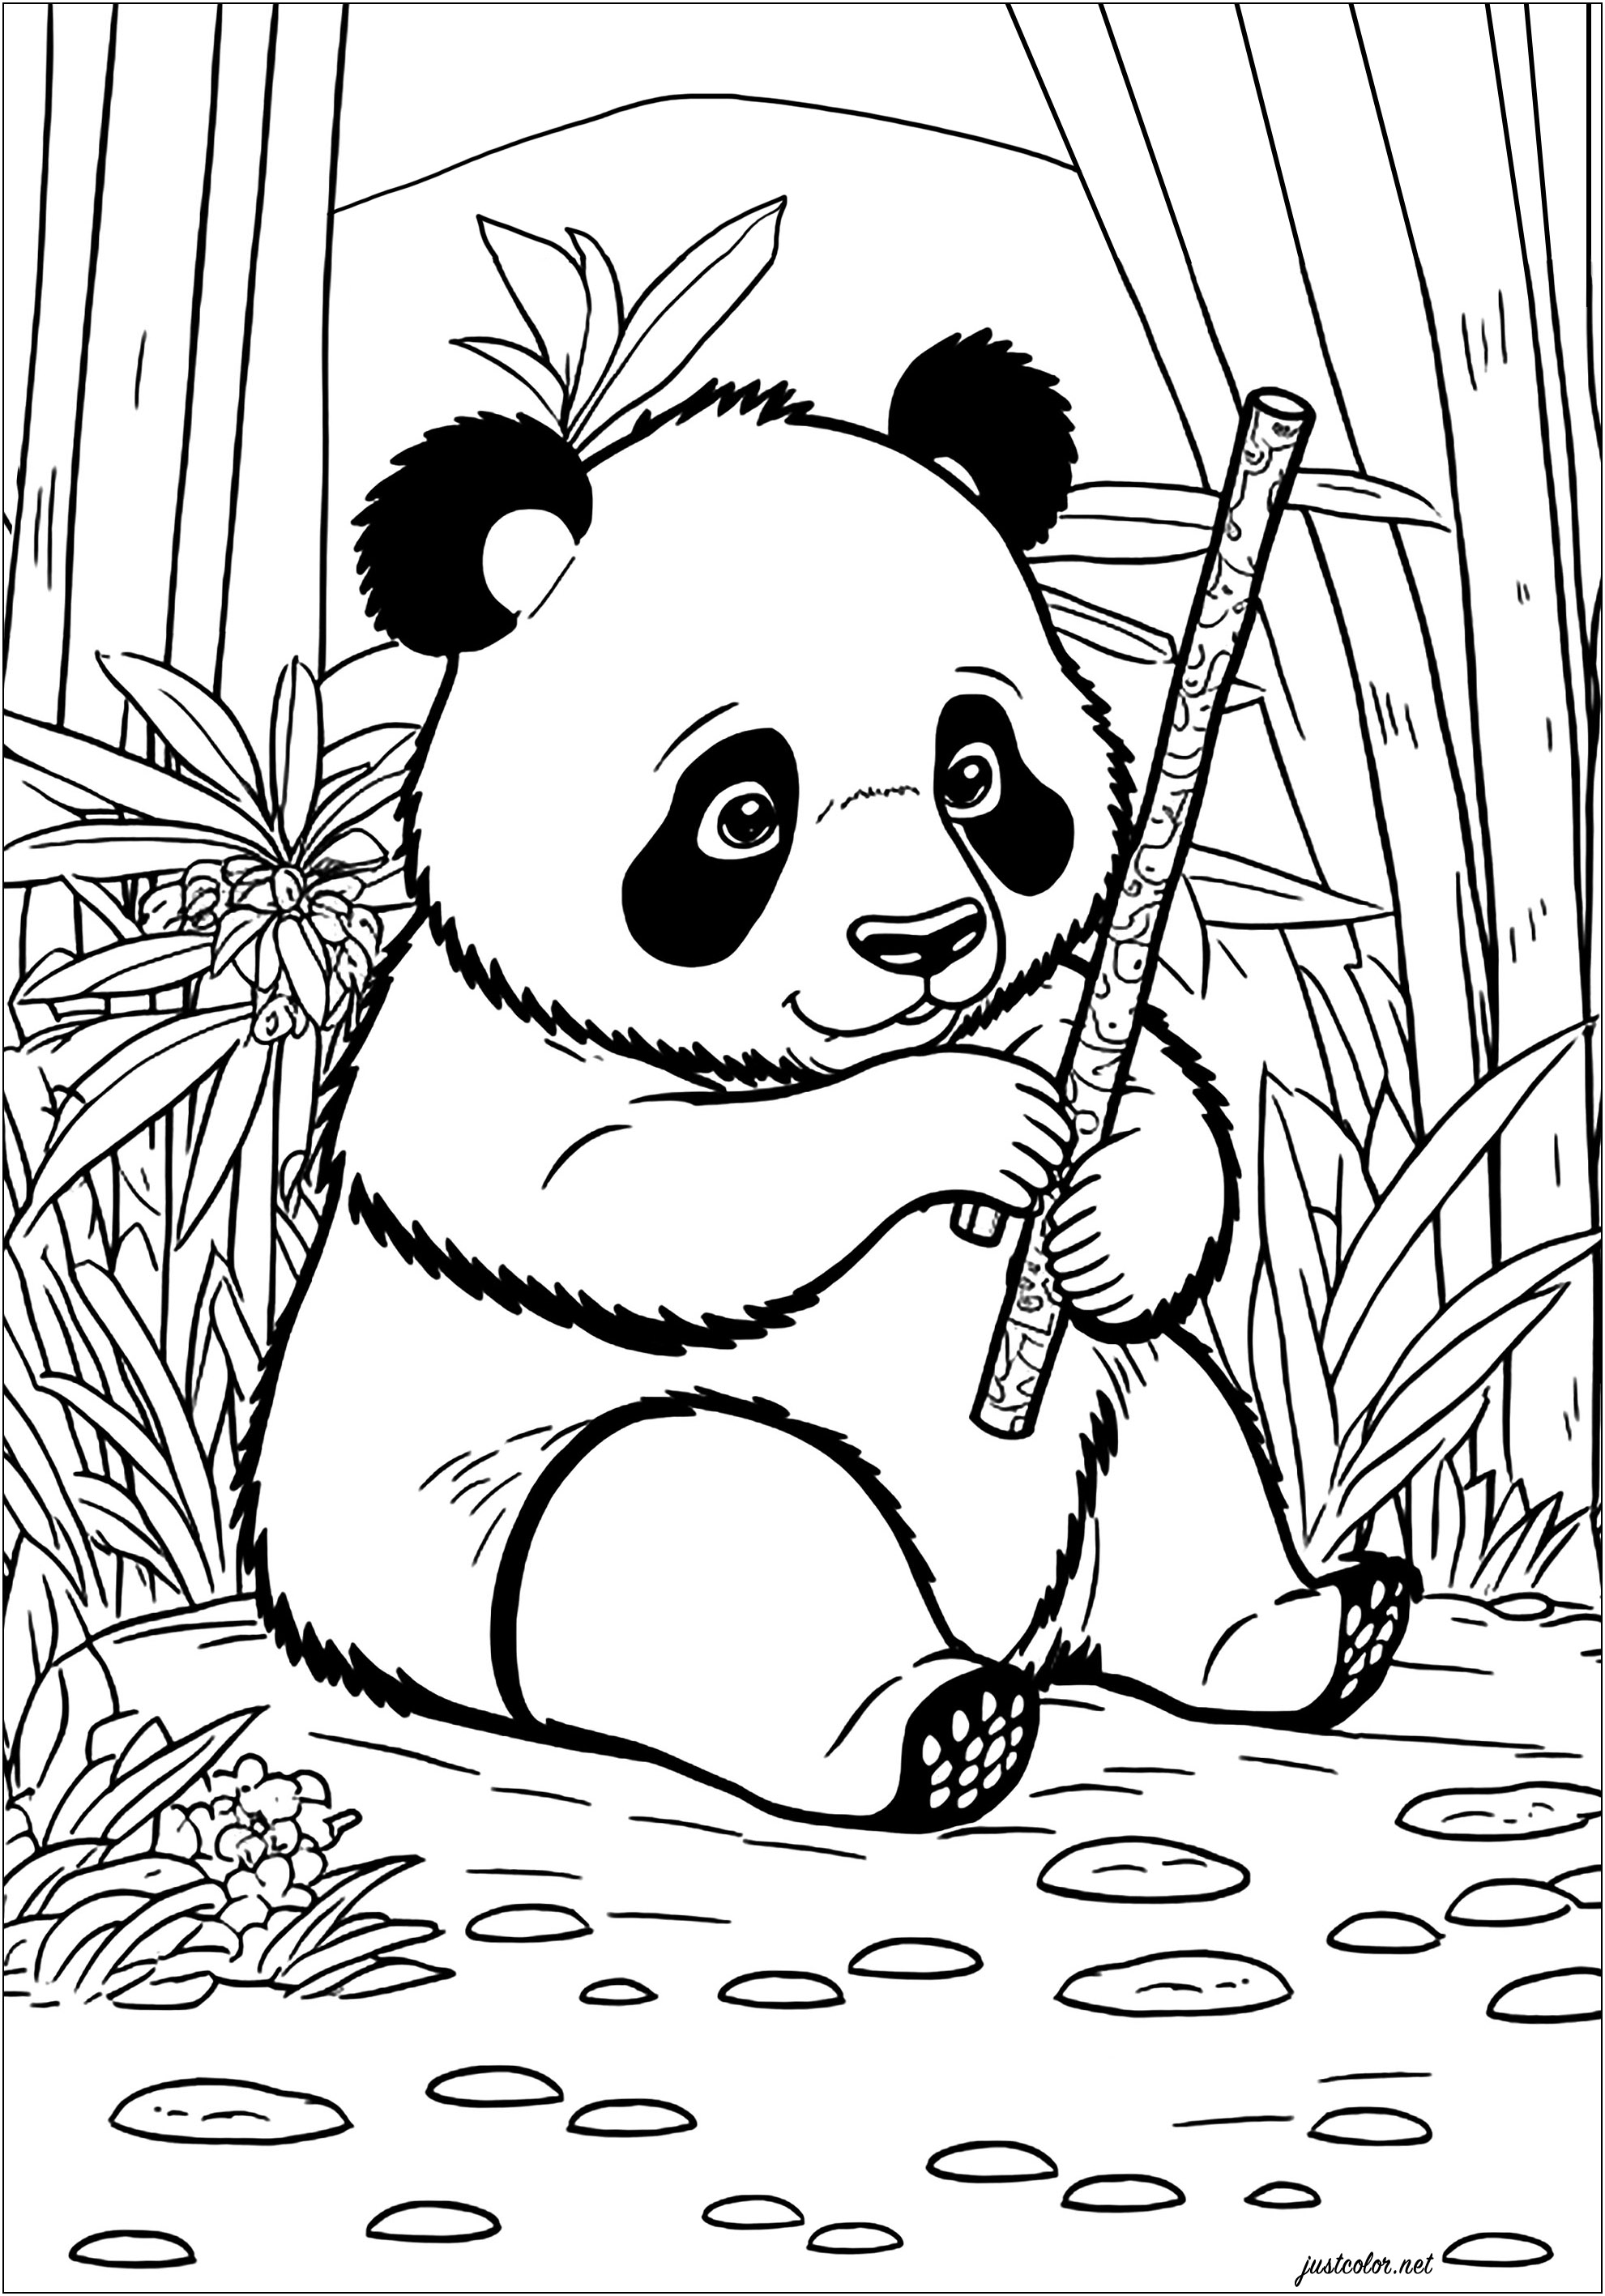 Panda joven comiendo bambú. Este panda de mejillas redondas y expresión juguetona está sentado en un frondoso bosque lleno de altos árboles de bambú. Come alegremente un tallo de bambú, ¡parece muy hambriento!